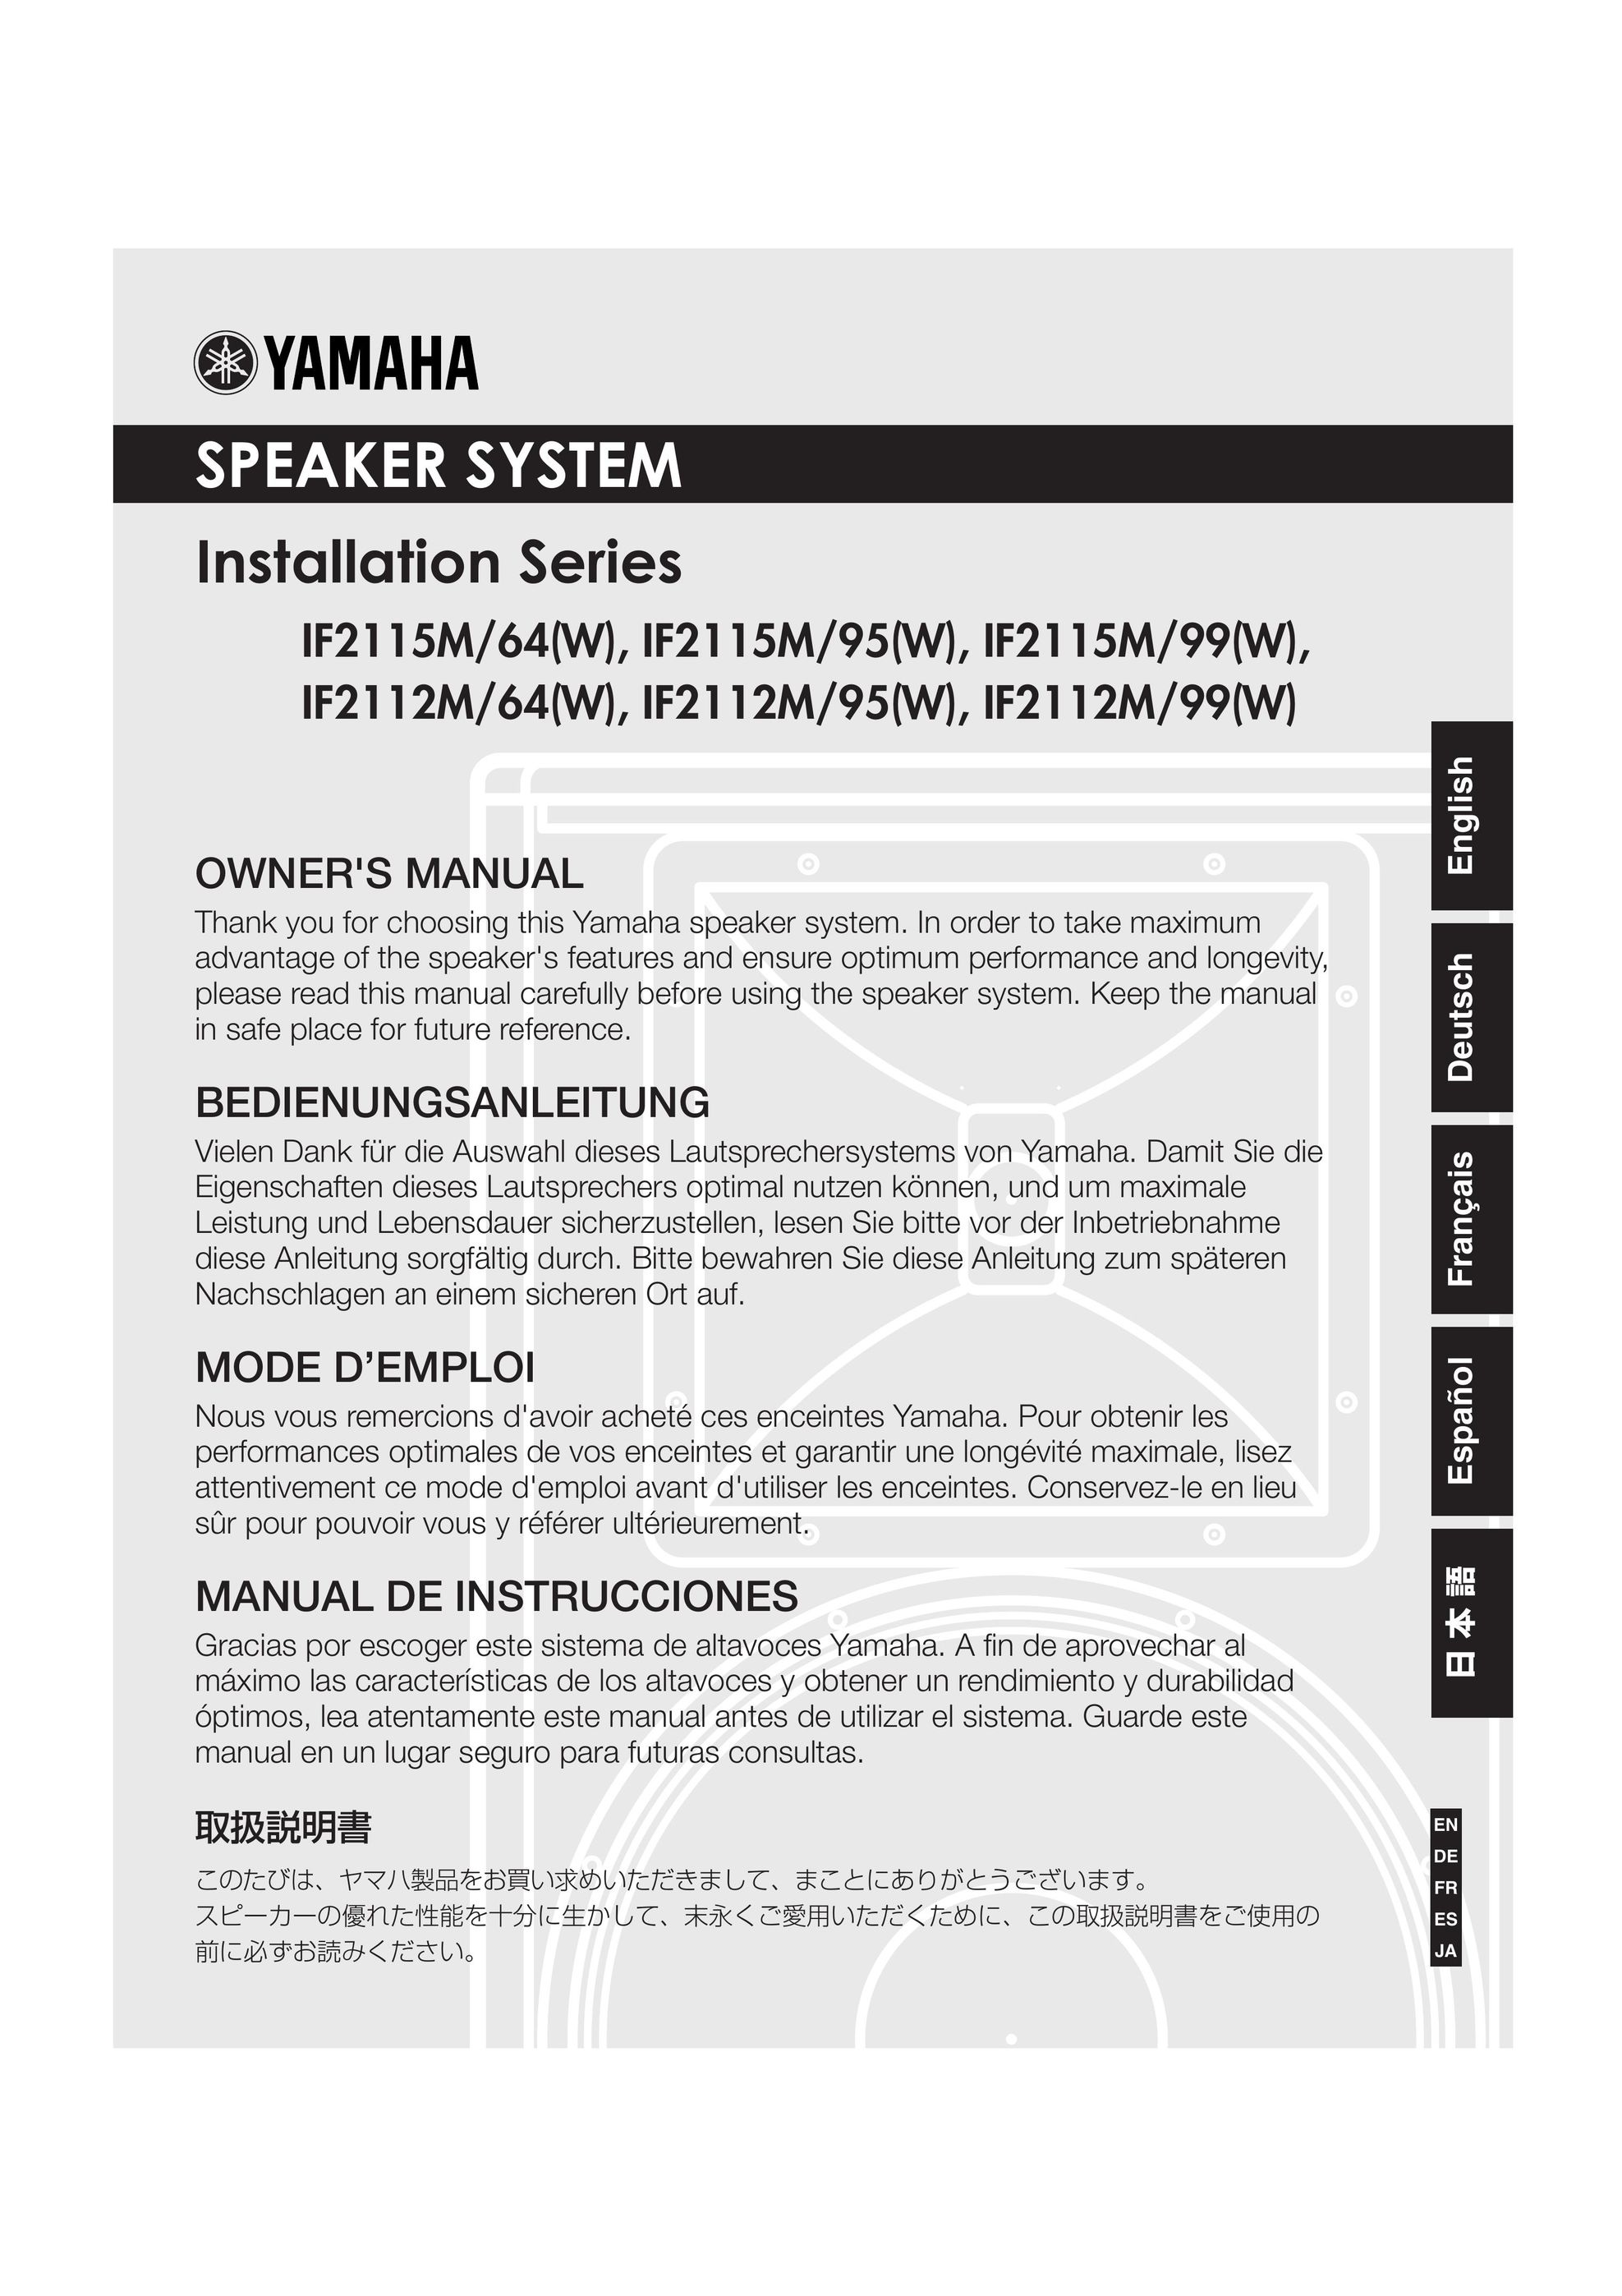 Yamaha IF2115M/99(W) Portable Speaker User Manual